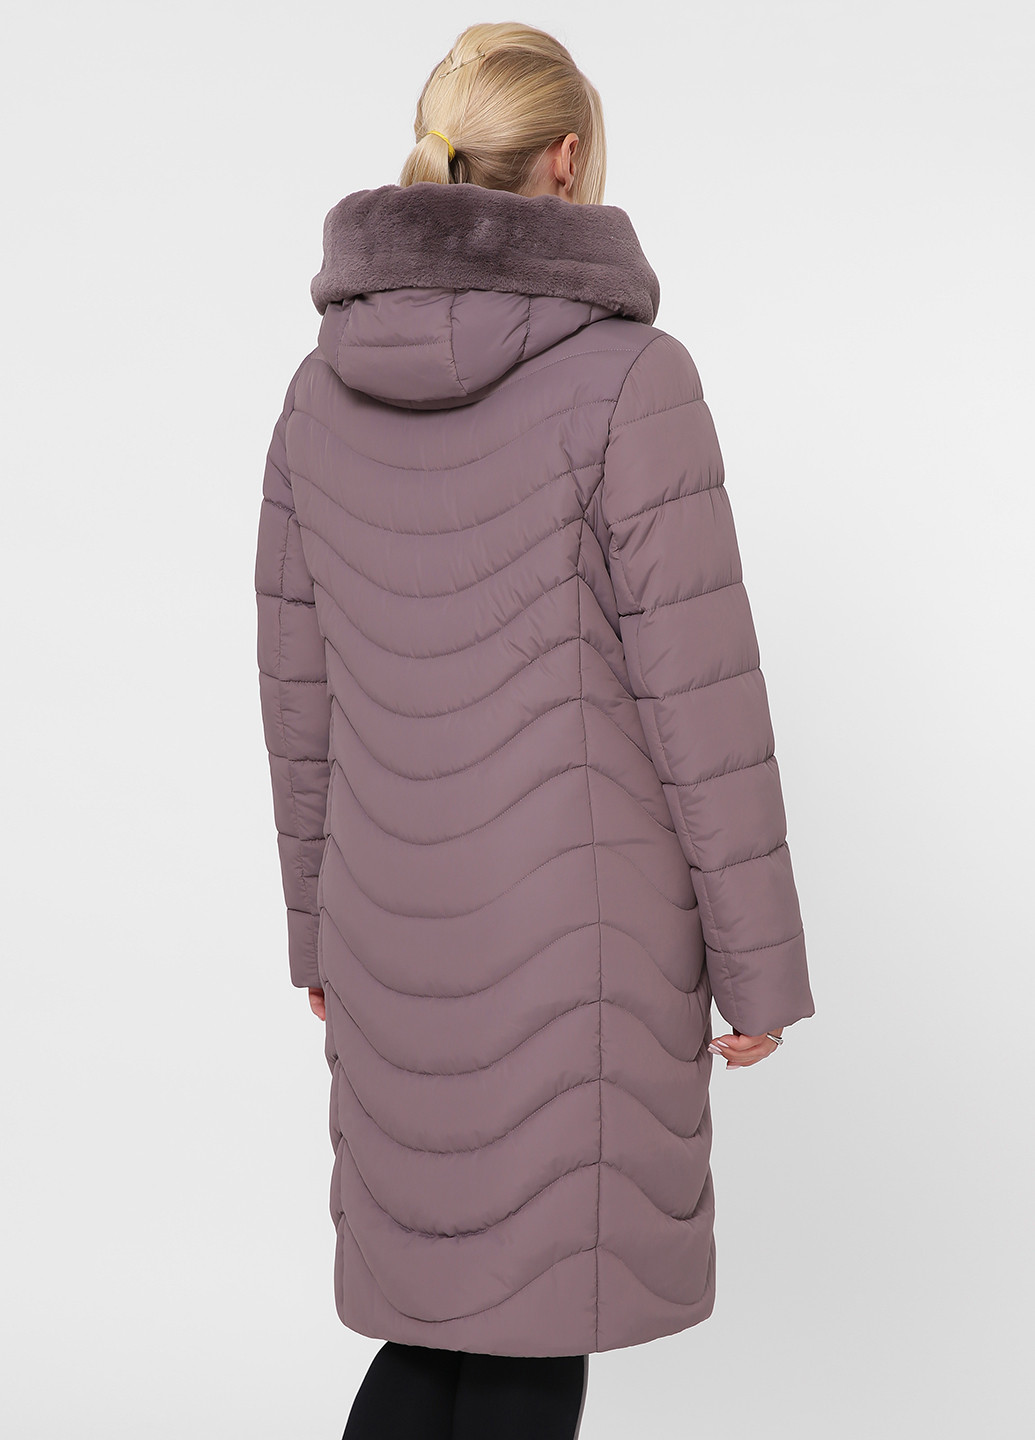 Розово-коричневая зимняя куртка Rolana